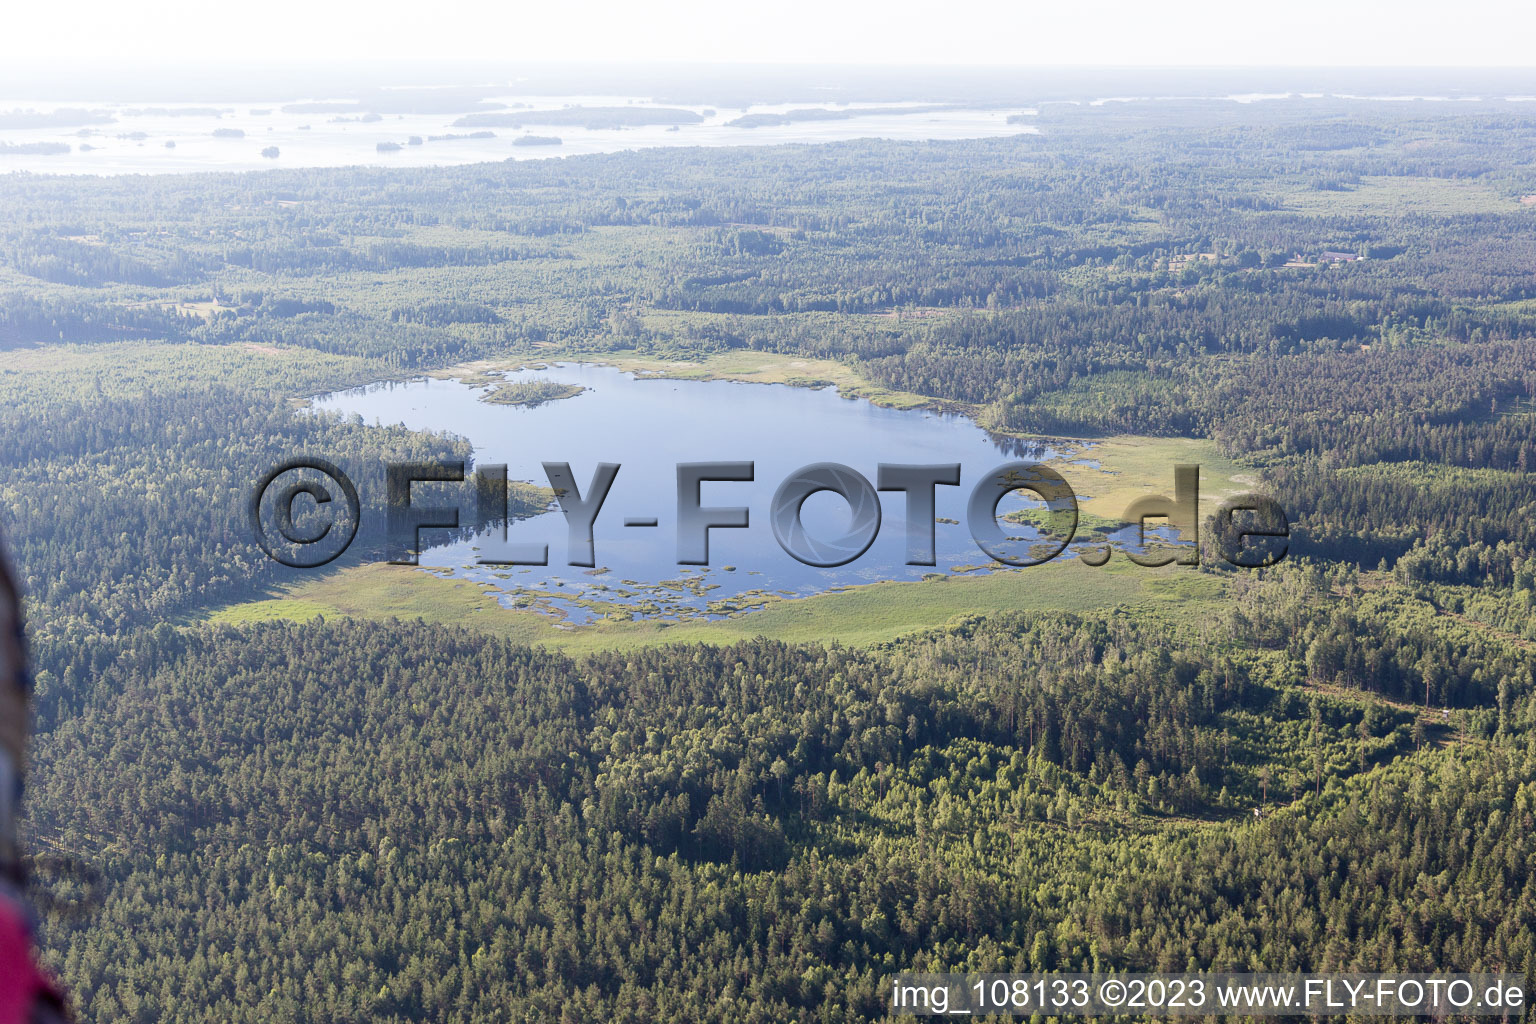 Aerial view of Flogmyran in the state Kronoberg, Sweden